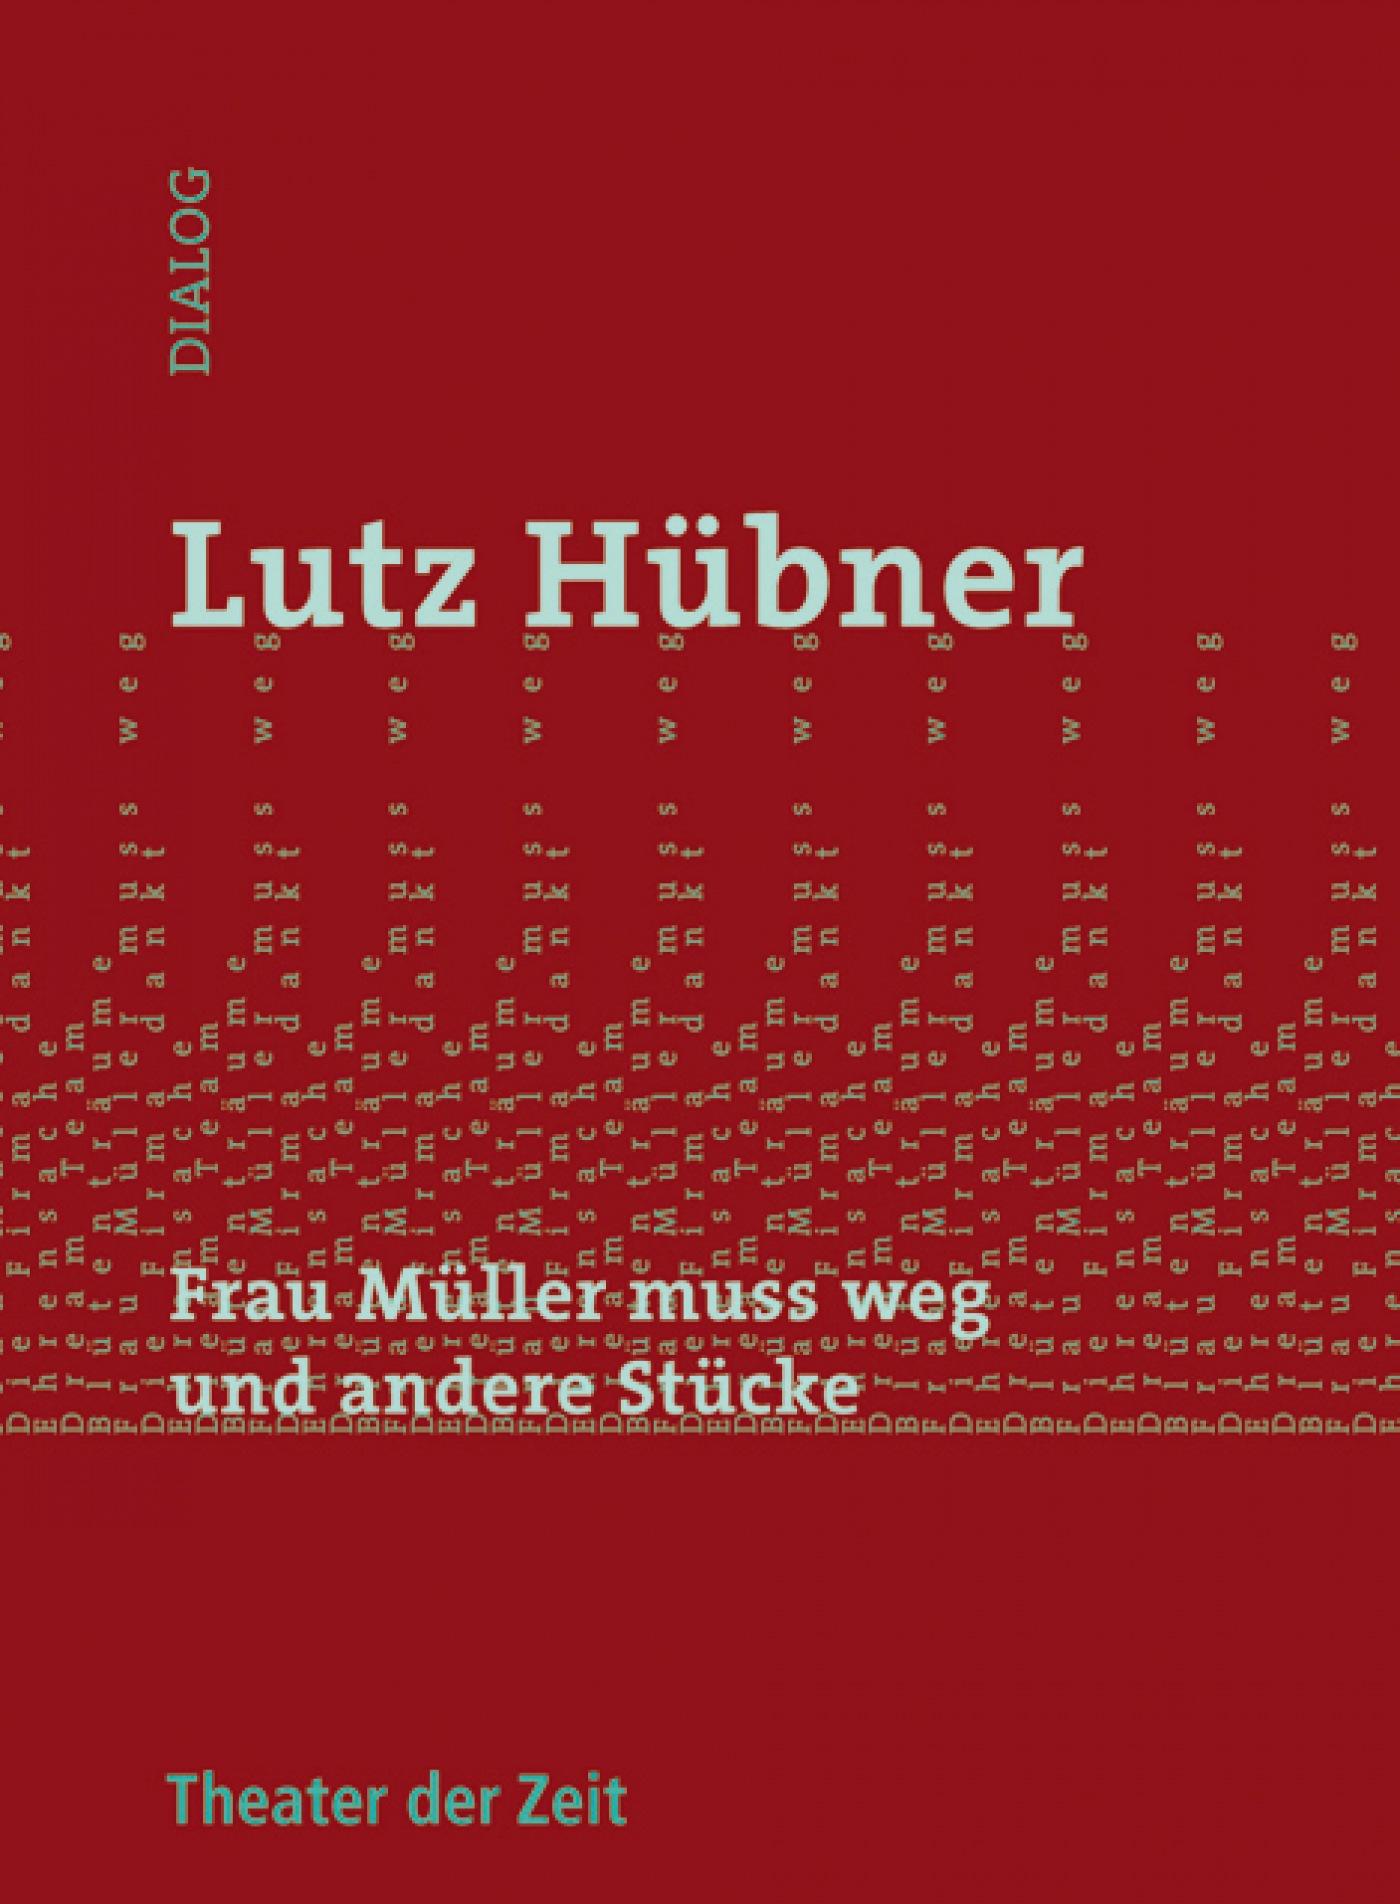 Dialog 13 "Frau Müller muss weg und andere Stücke"